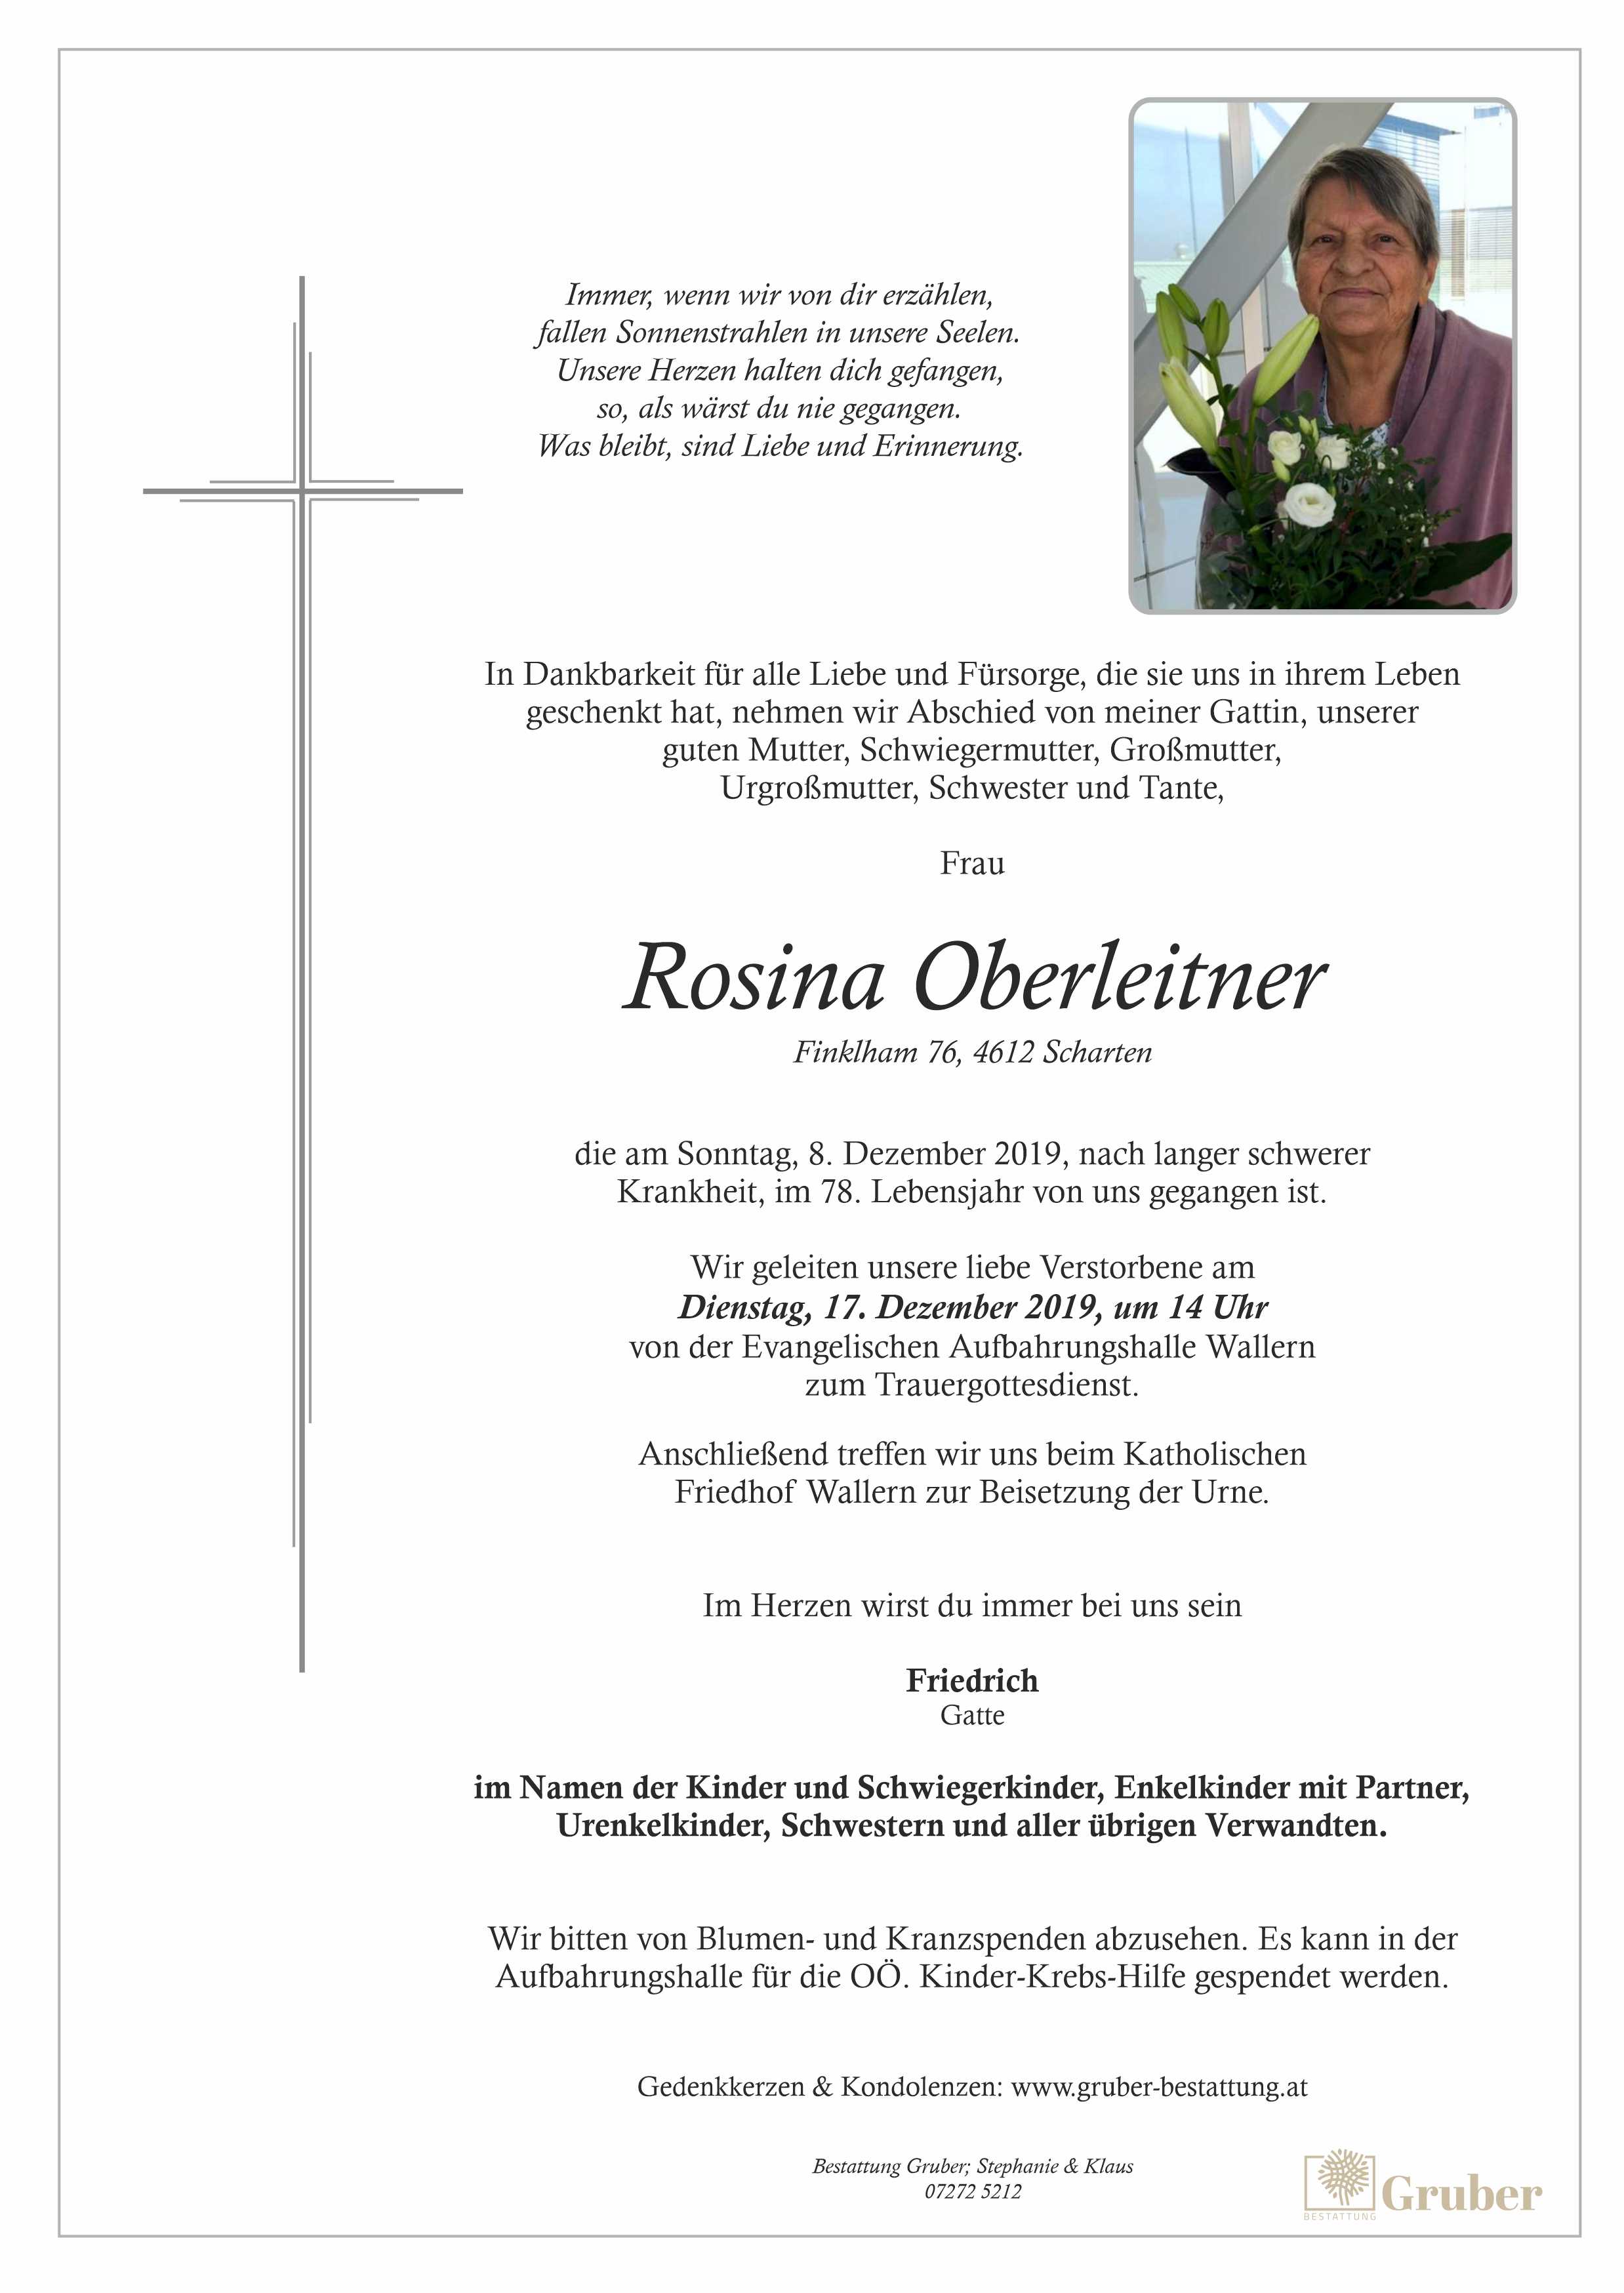 Rosa Oberleitner (Wallern)